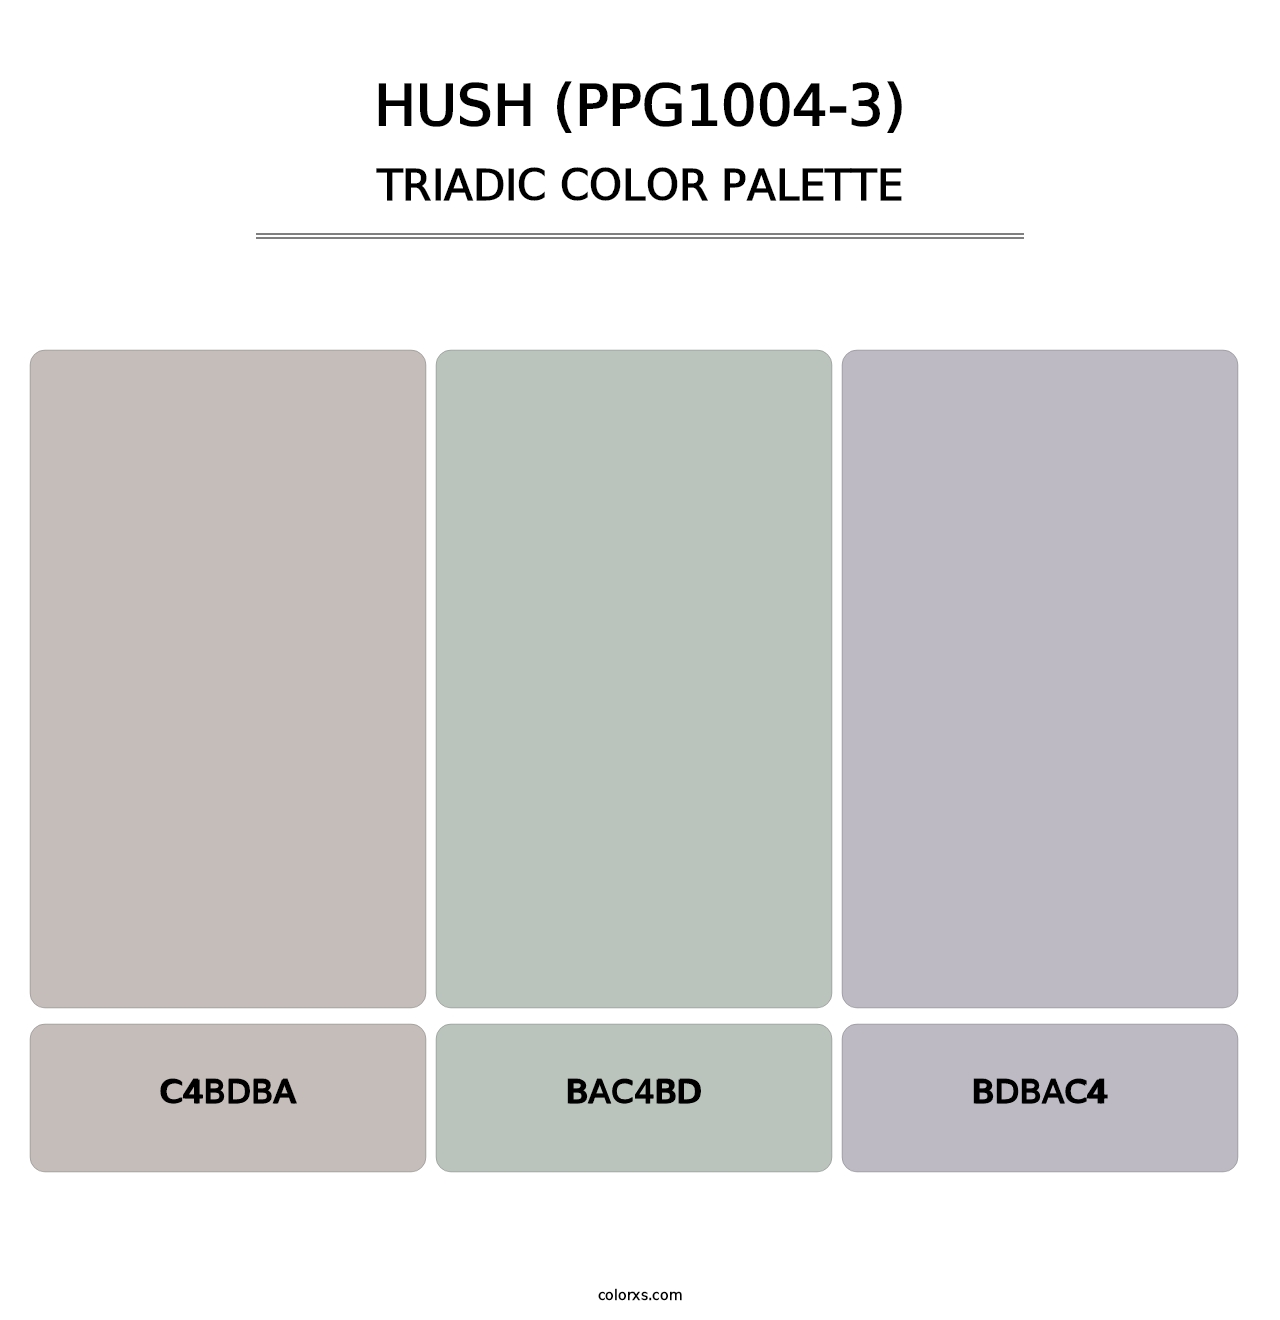 Hush (PPG1004-3) - Triadic Color Palette